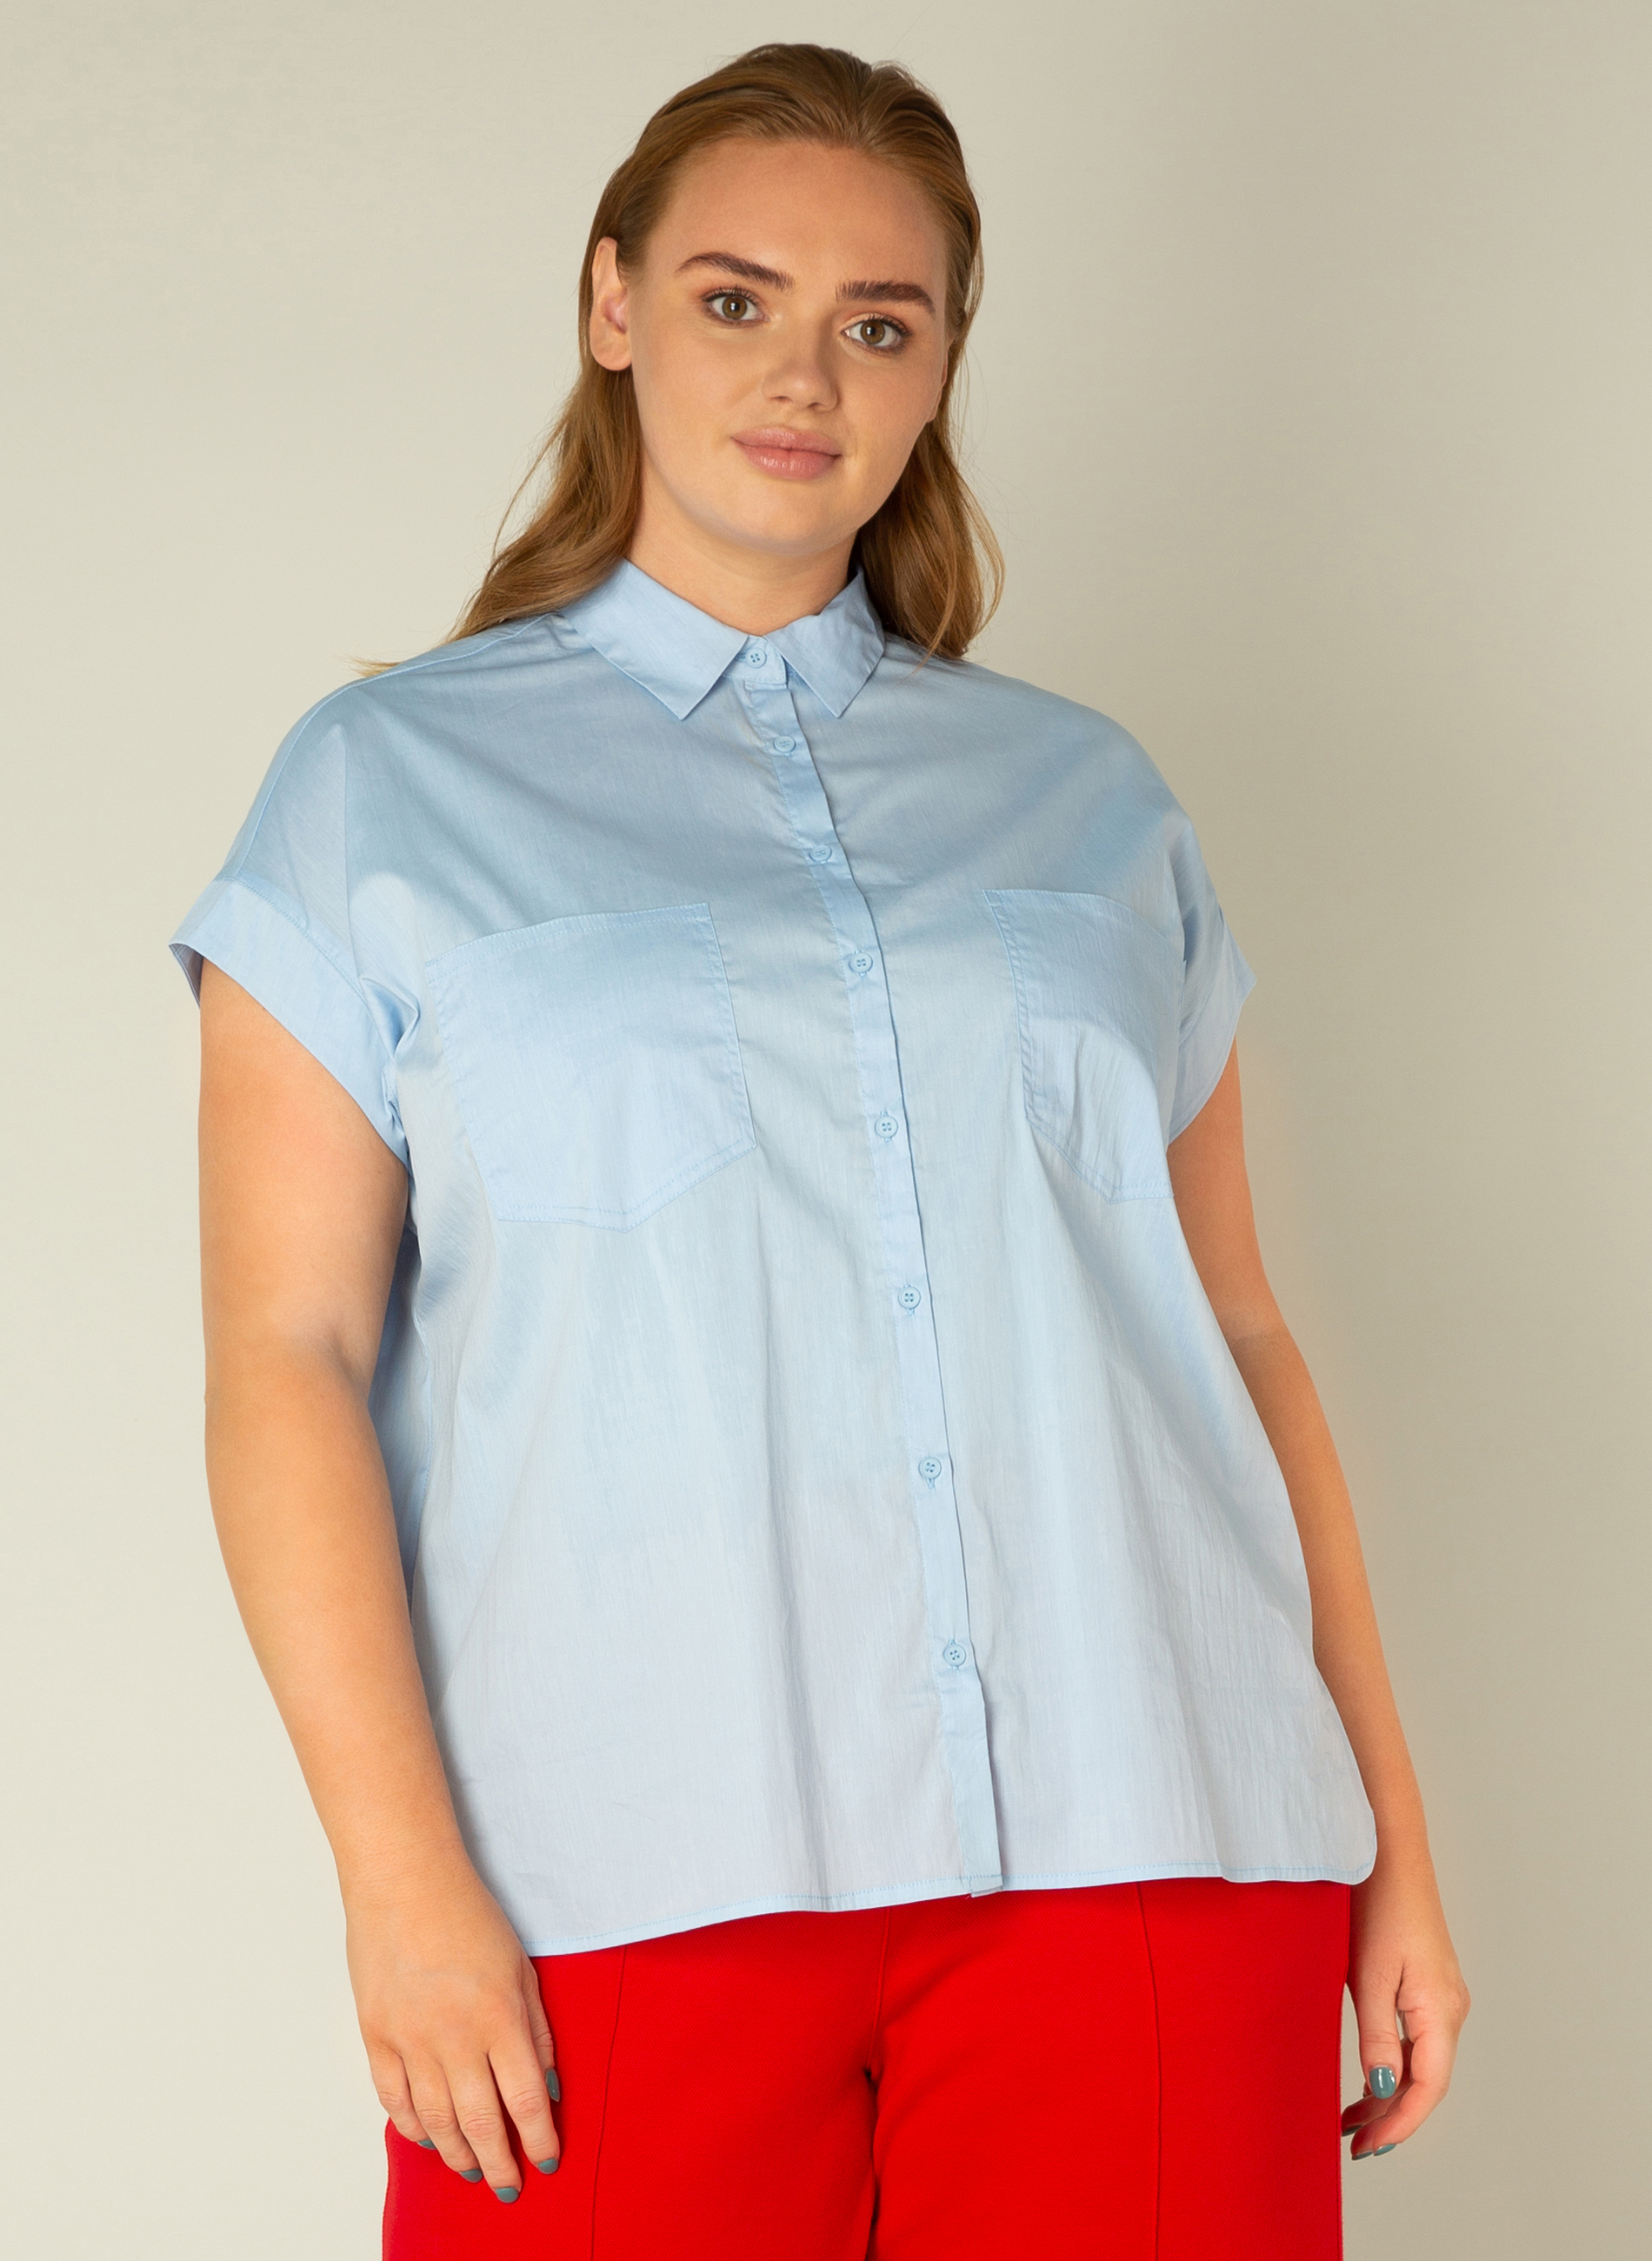 YESTA blouse Jilaney 78 cm